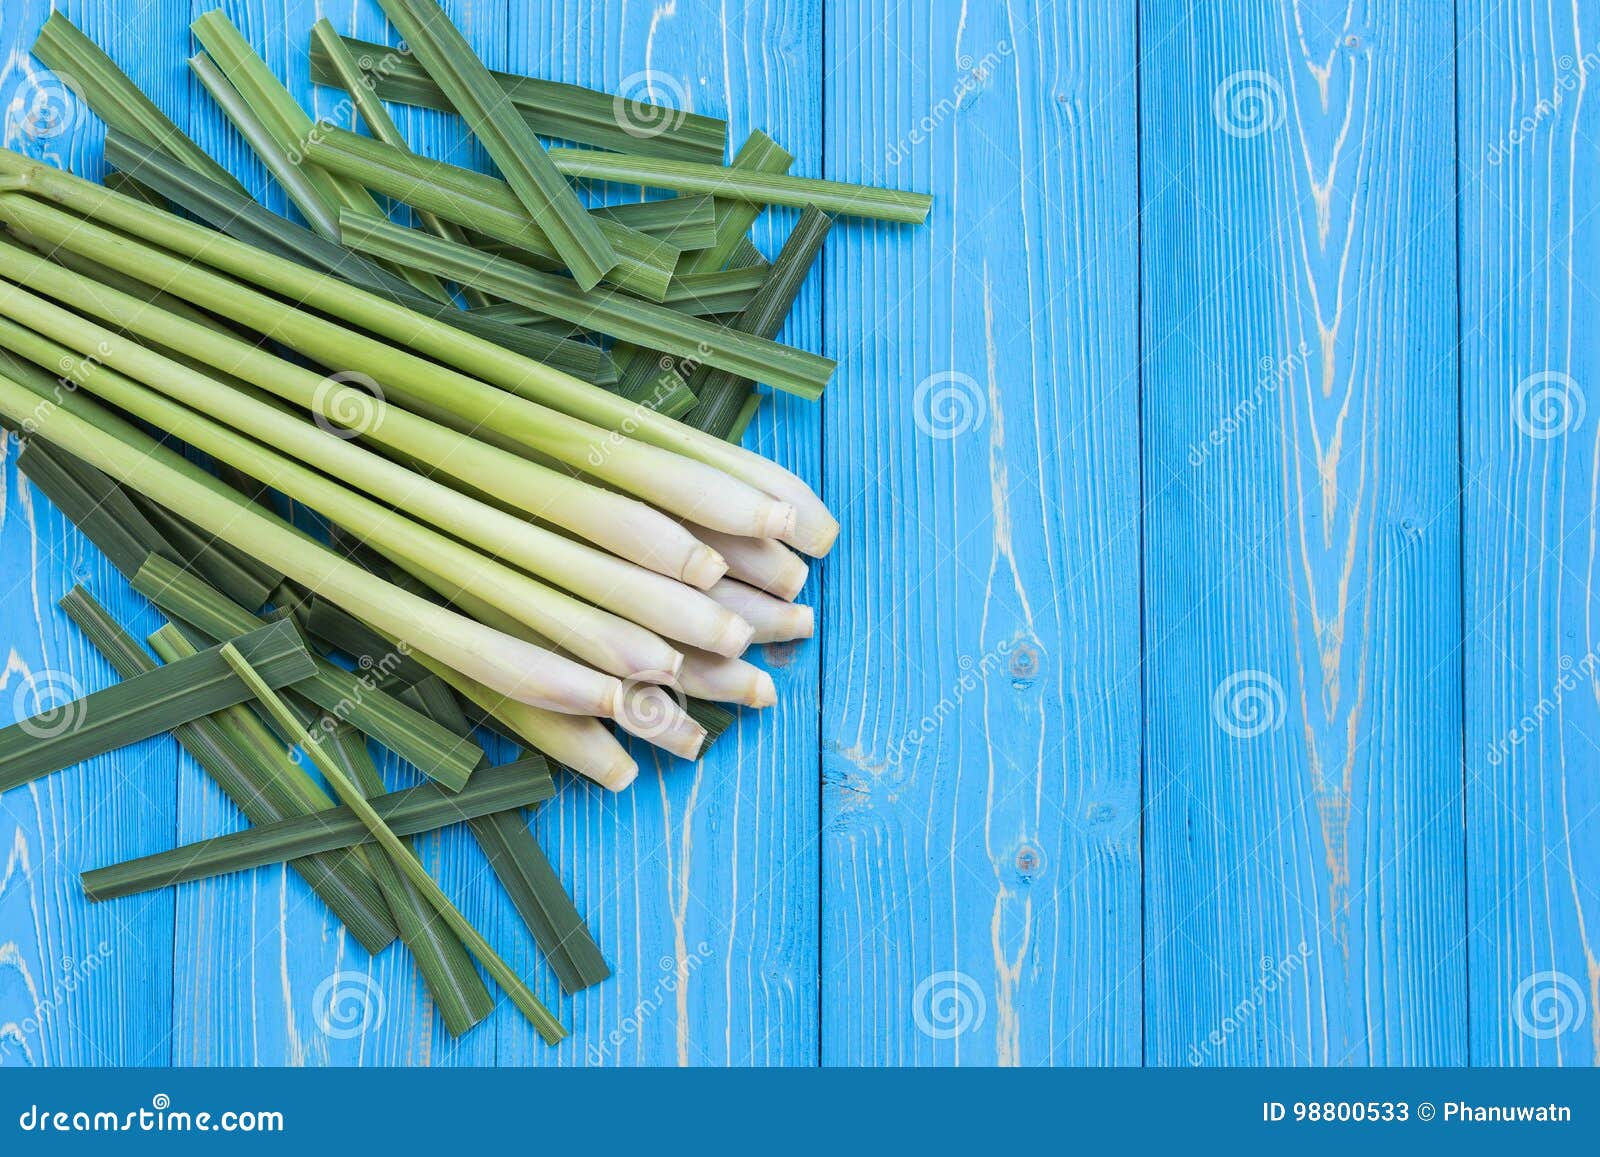 fresh lemongrass or citronella grass leaf on blue wooden plank